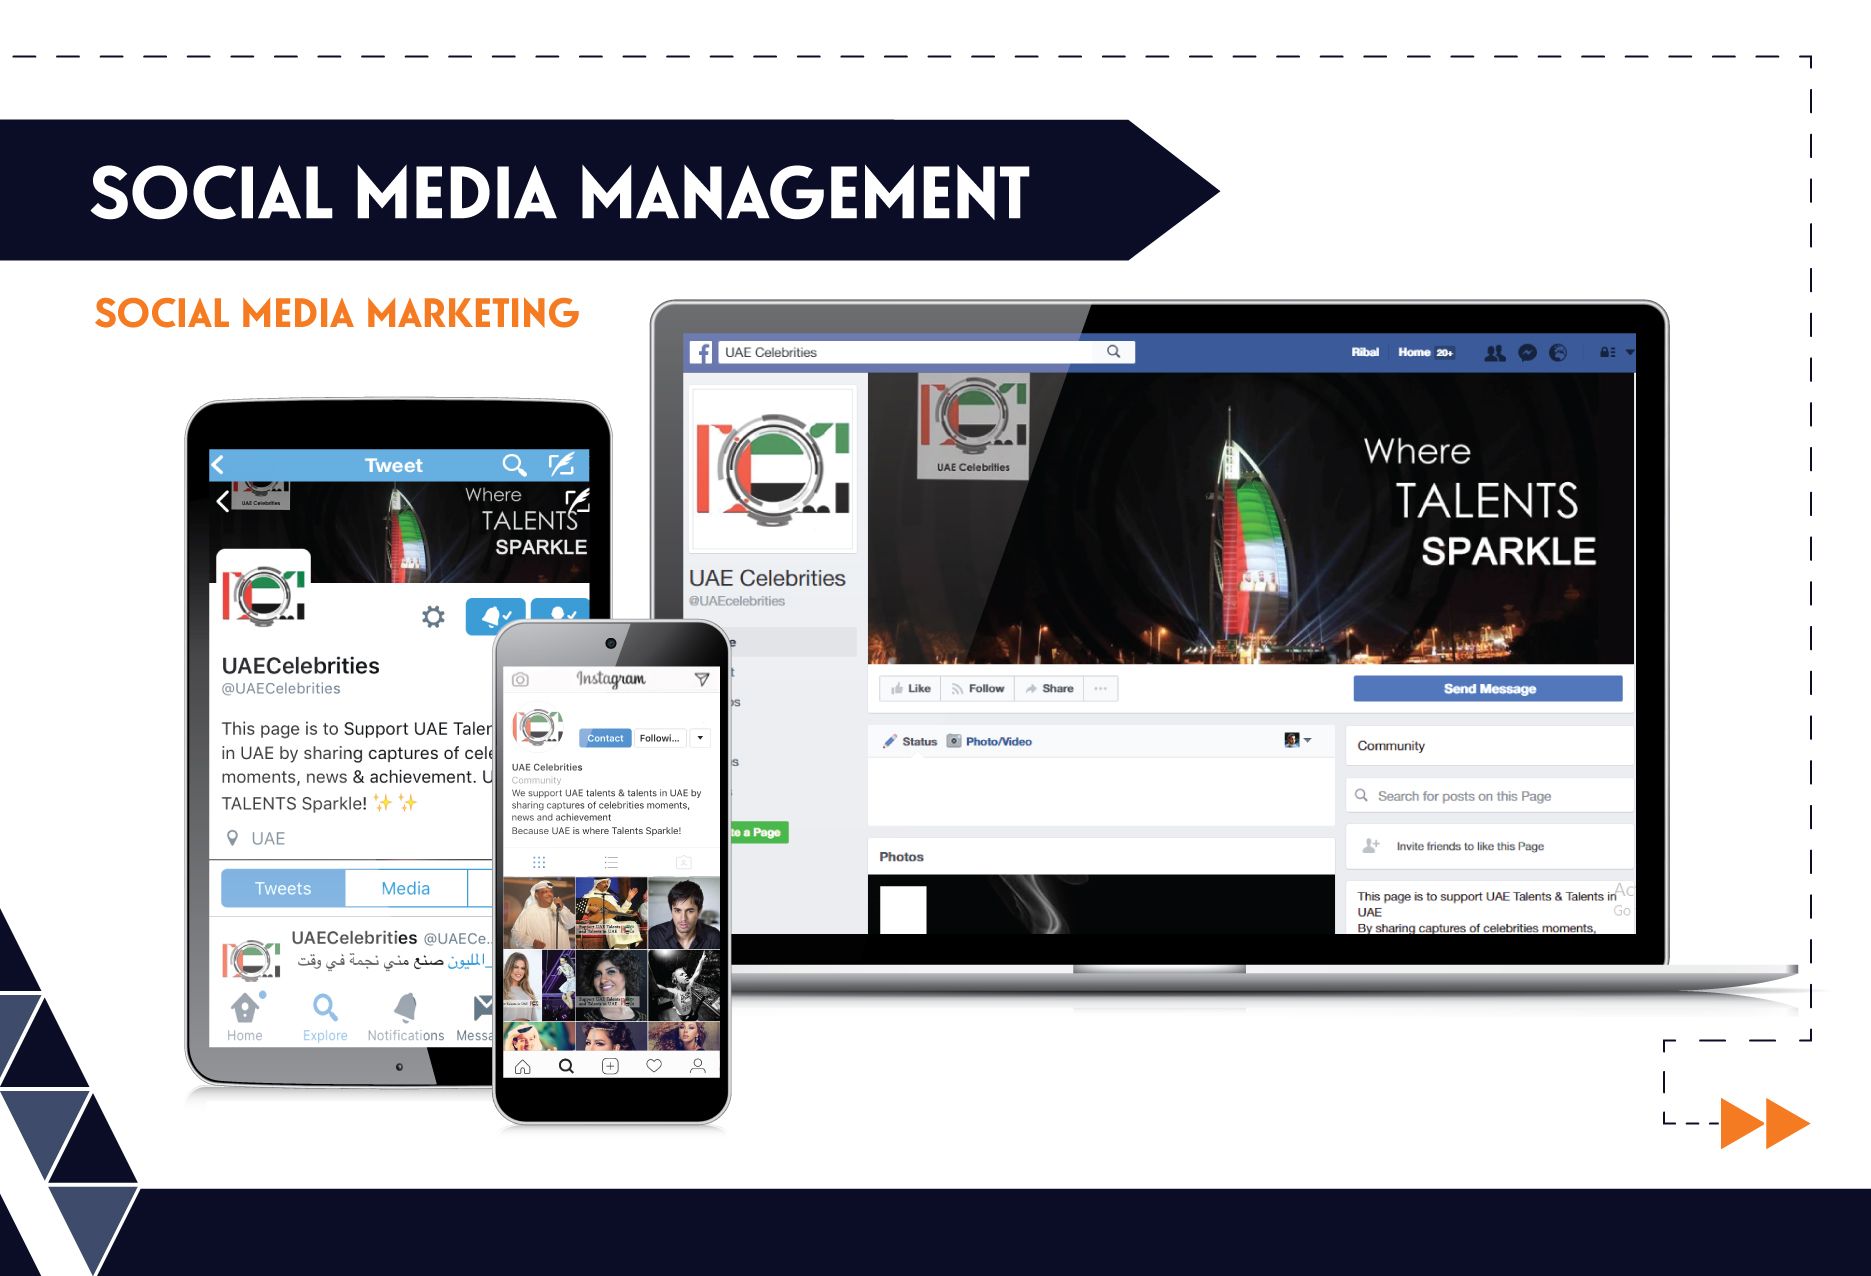 Social Media Management - UAE Celeb.